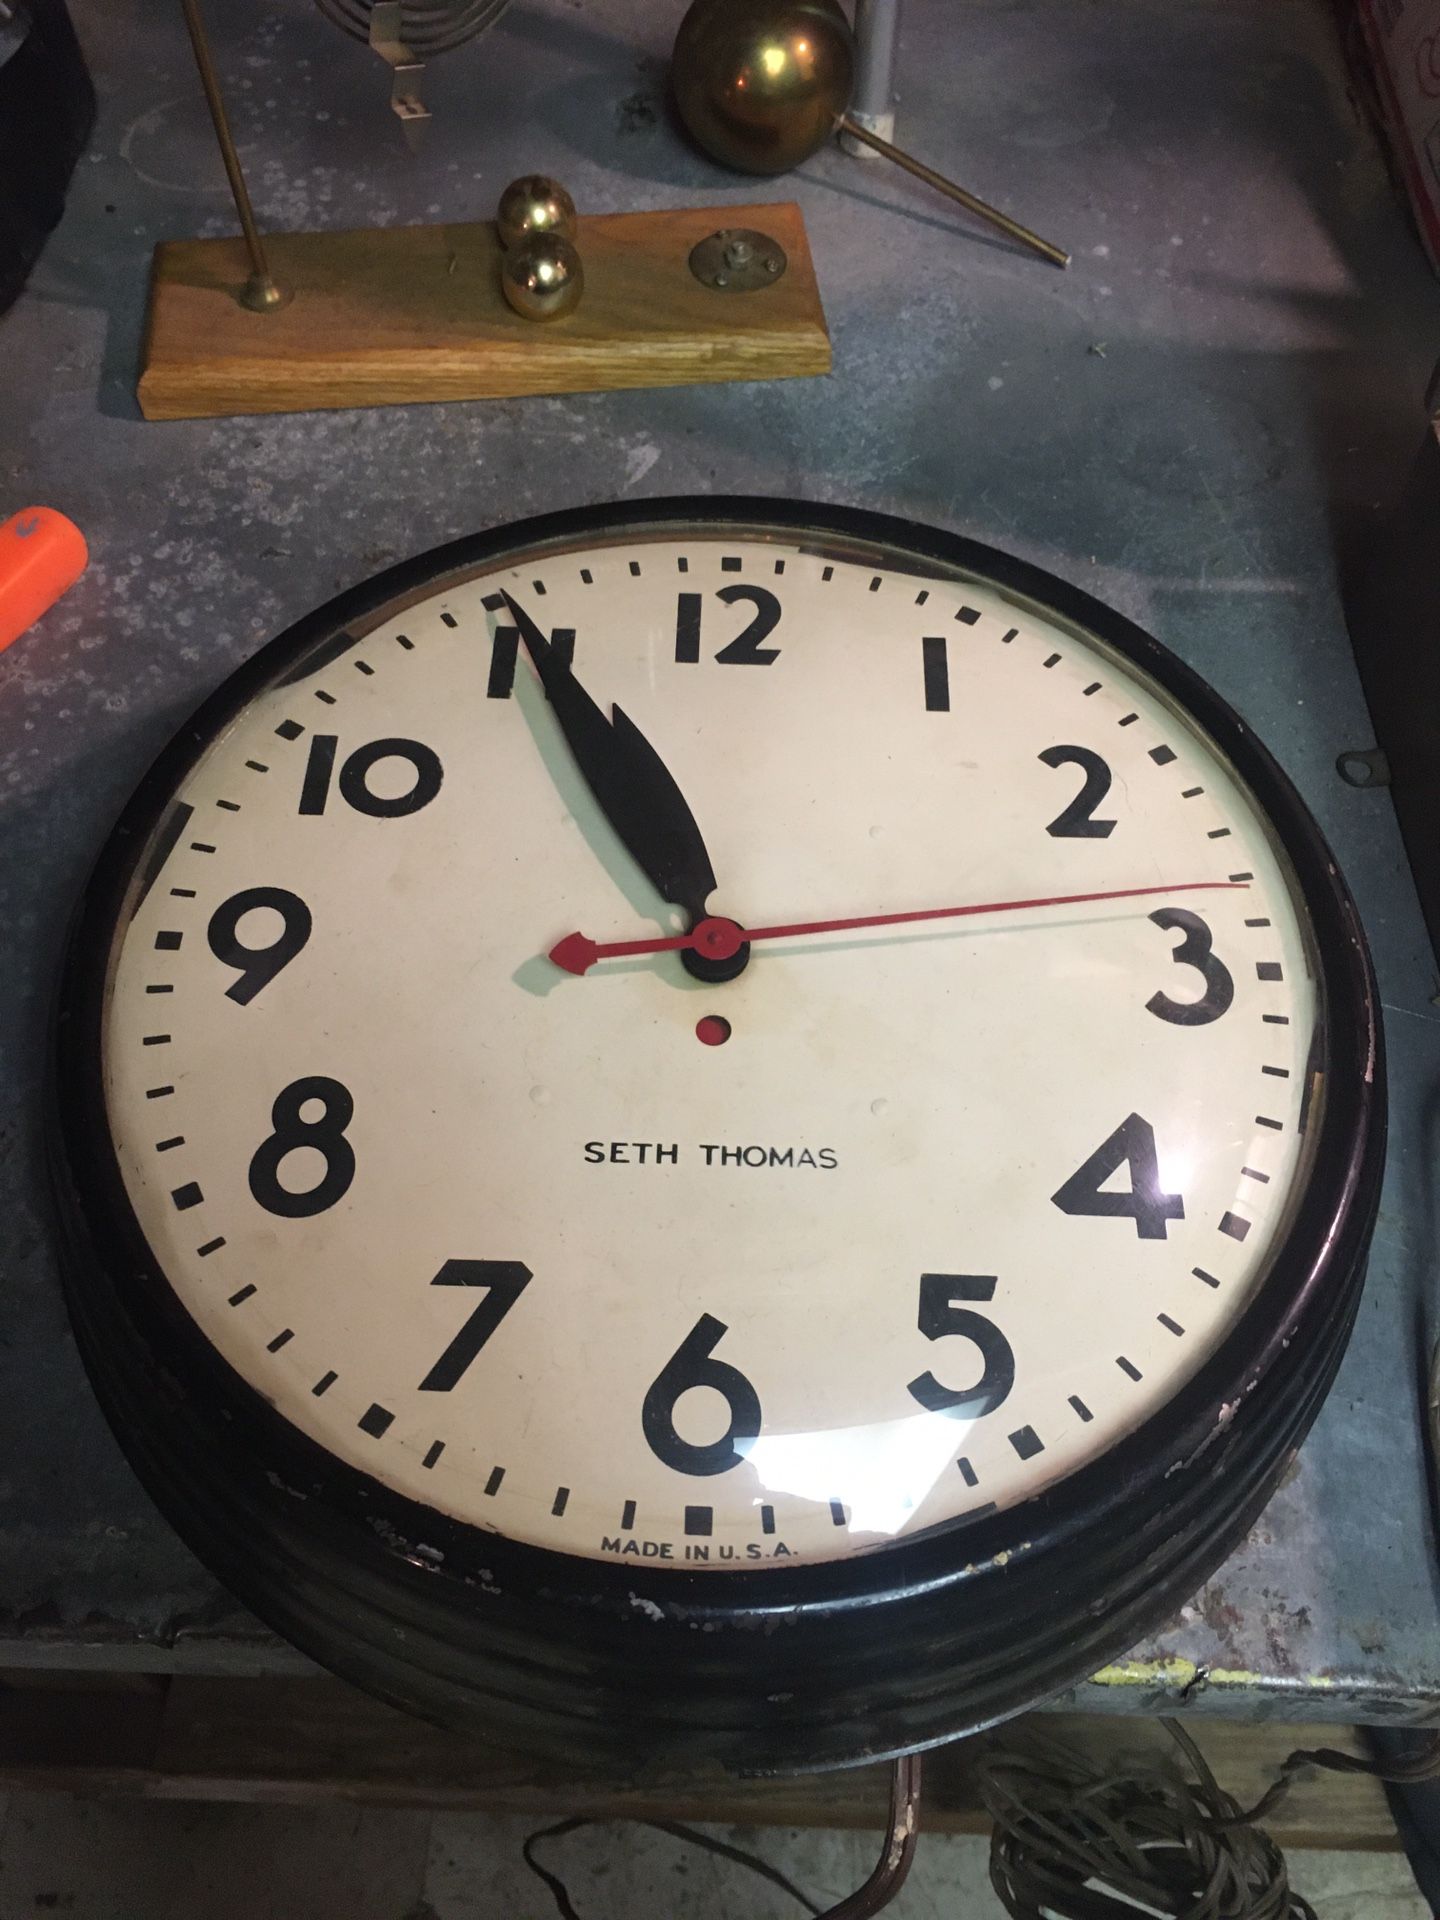 Vintage Seth Thomas wall clock. Needs repair